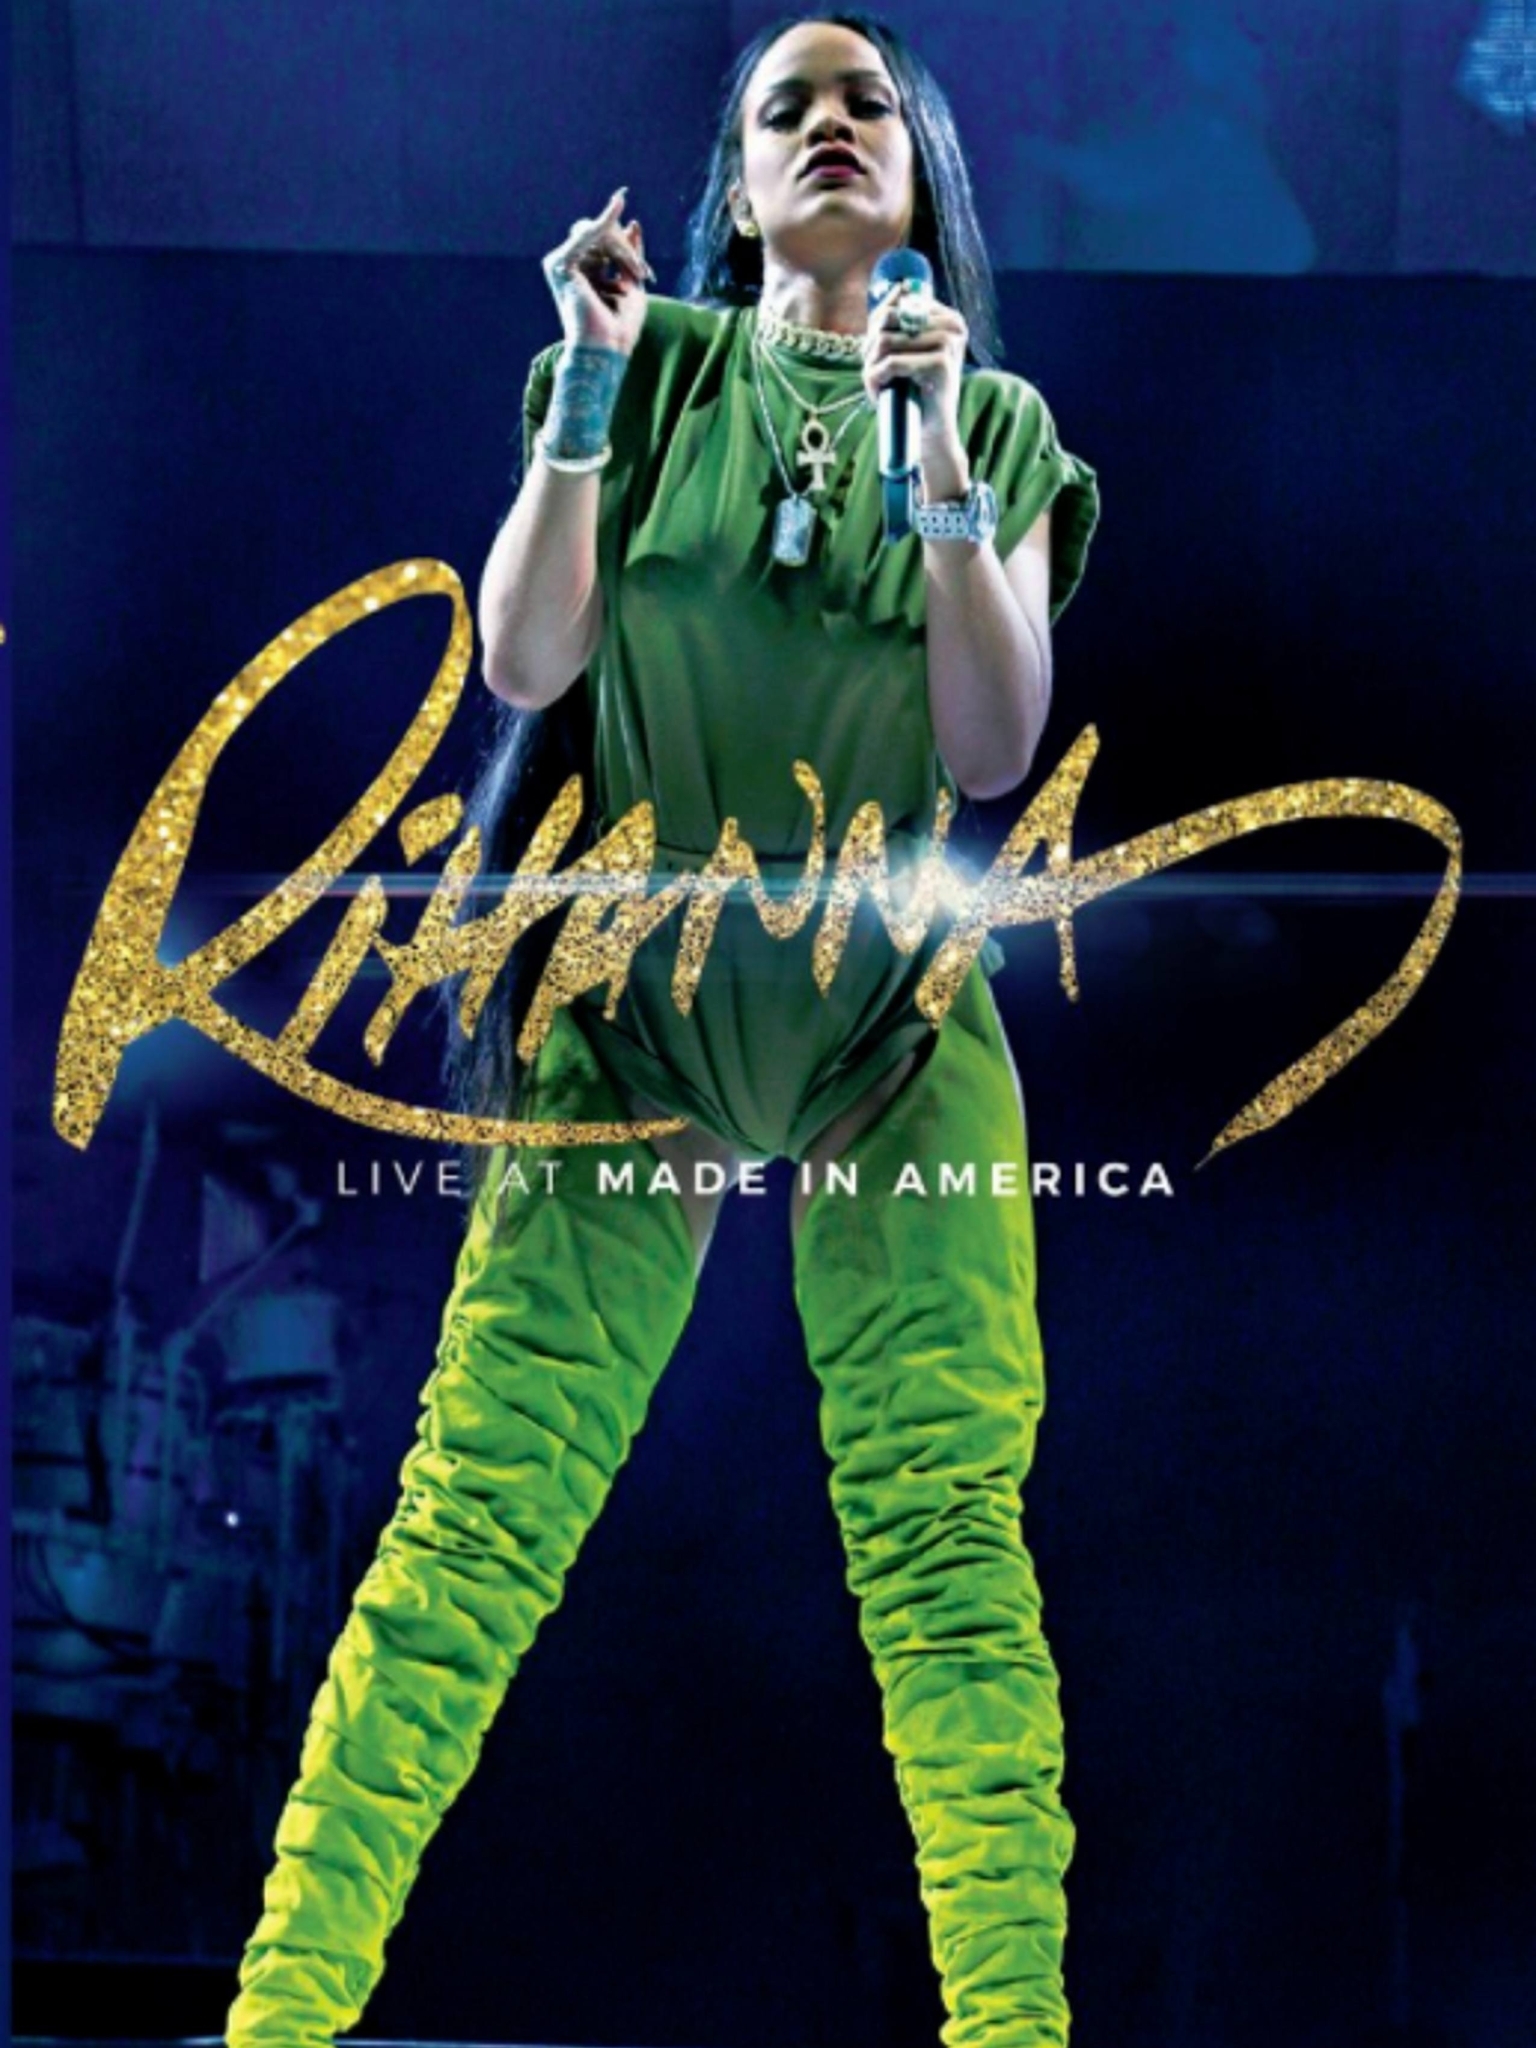 Rihanna-Live Made In America 2016 GG NLSUBBED 1080p WEB x264-DDF